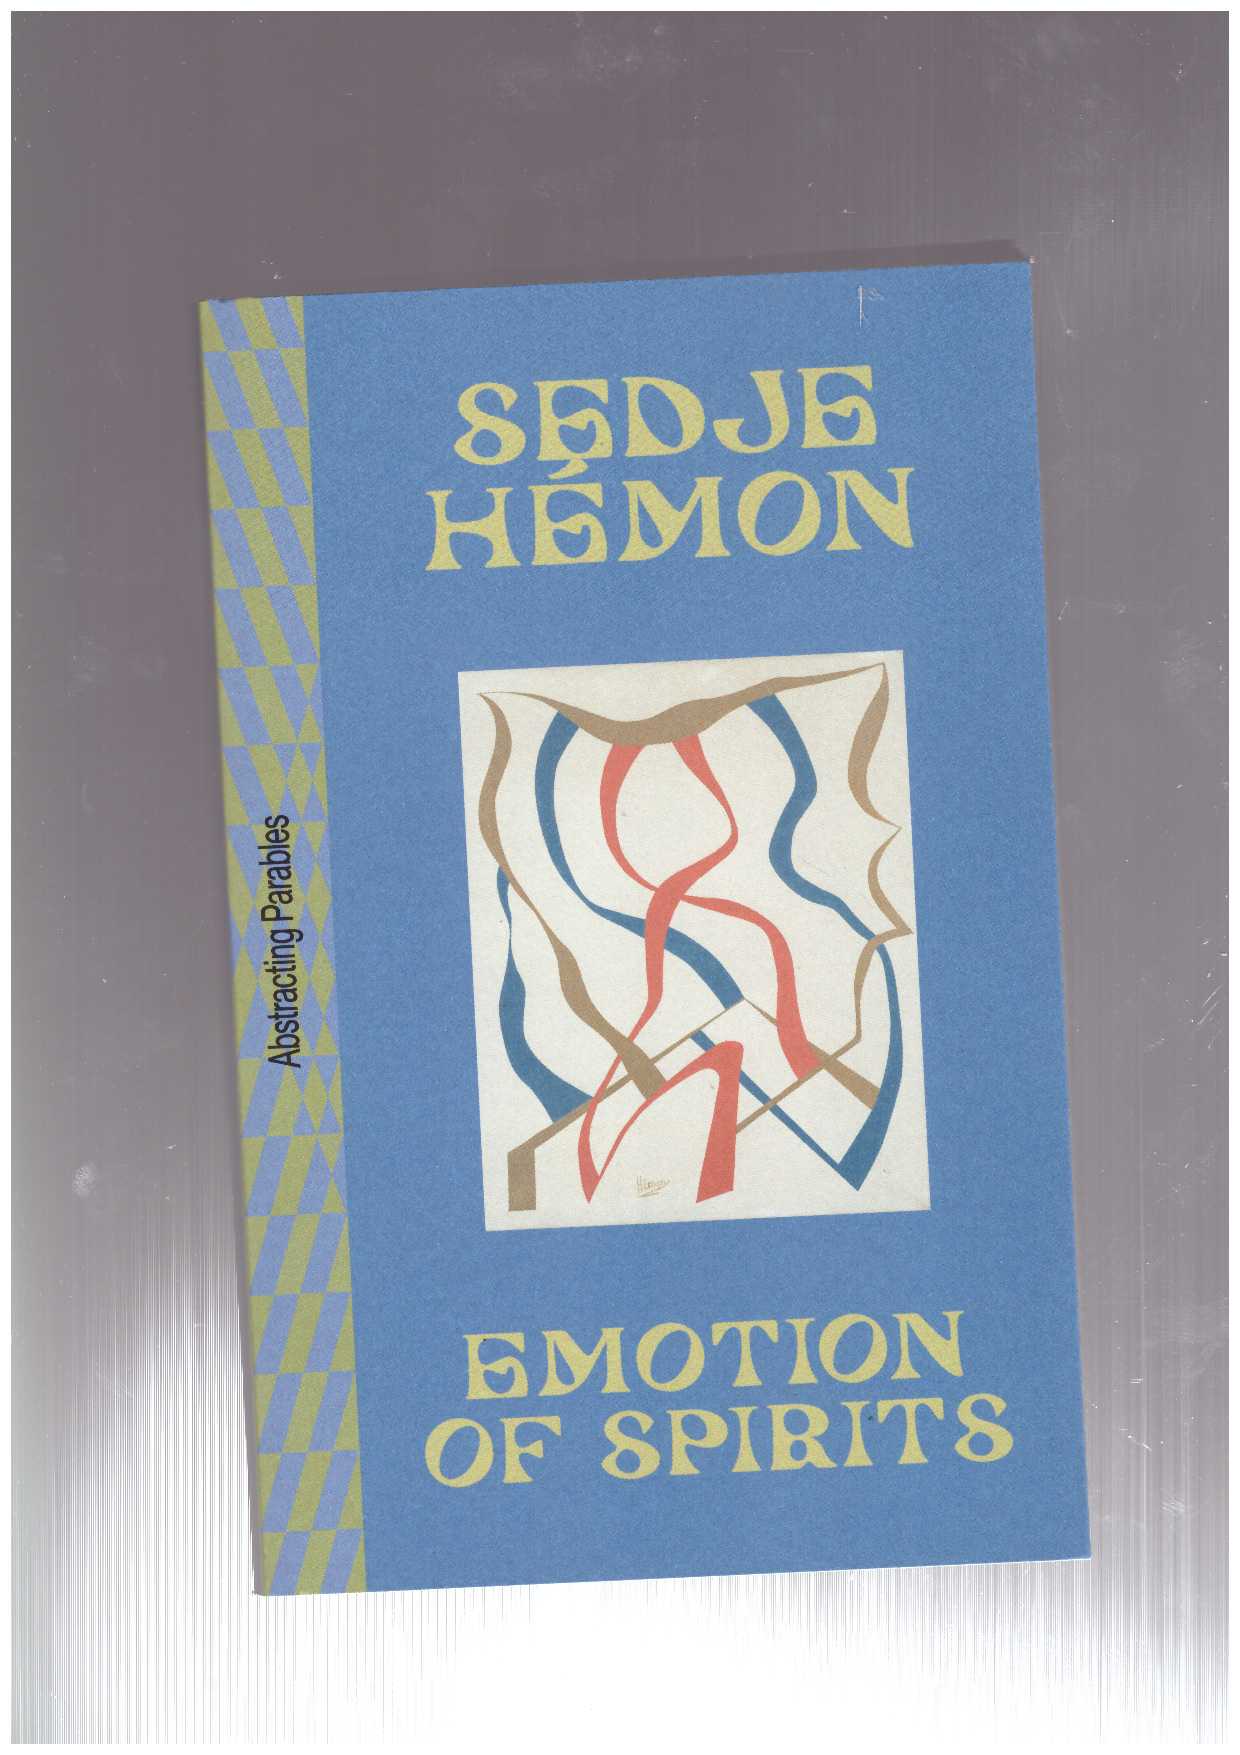 HÉMON, Sedje - Emotion of Spirits